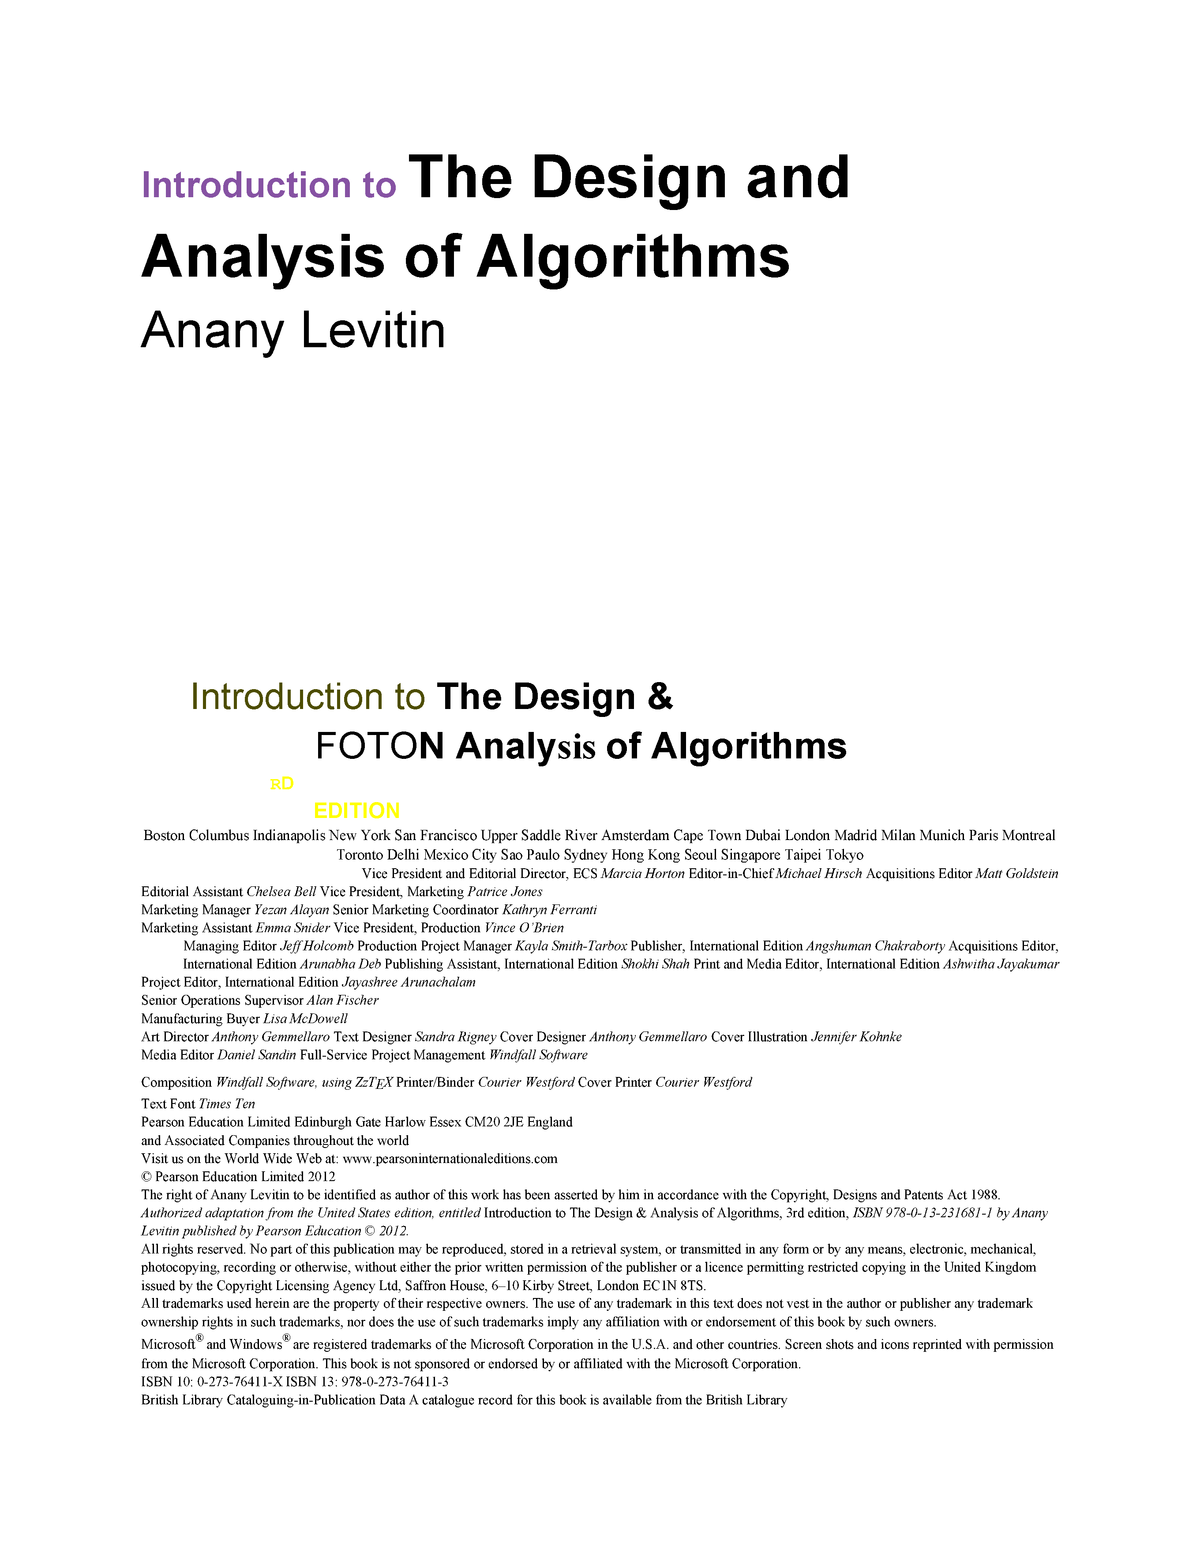 algorithmic puzzles by anany levitin pdf